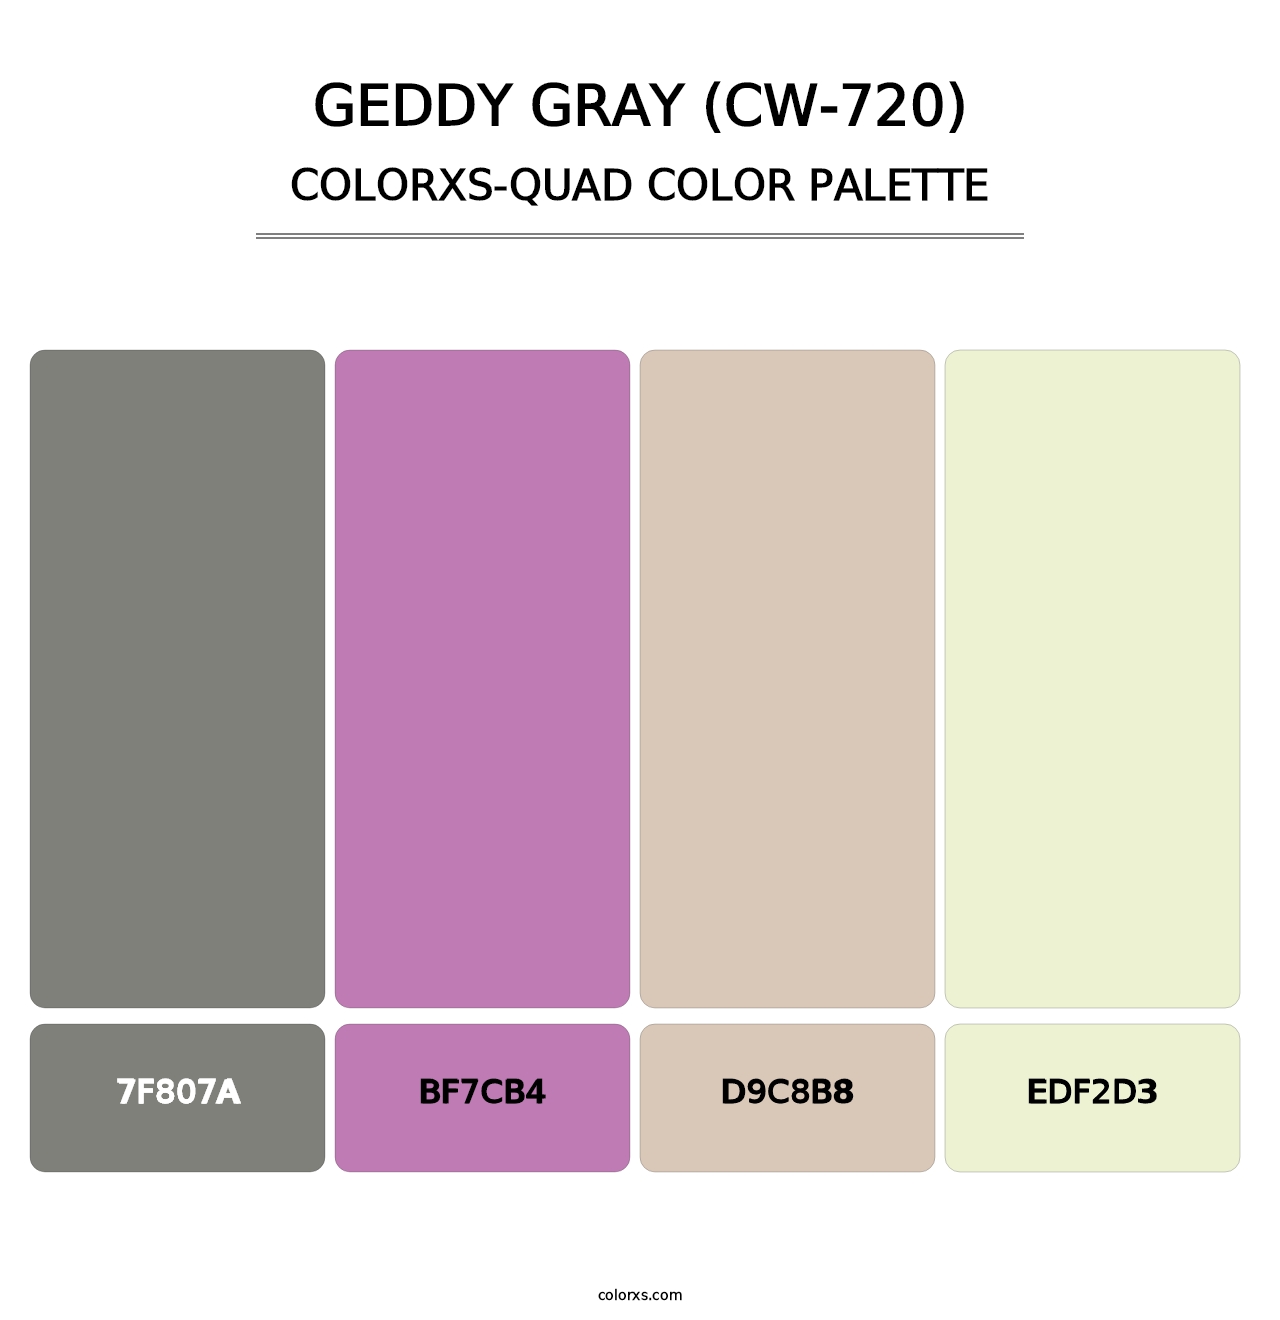 Geddy Gray (CW-720) - Colorxs Quad Palette